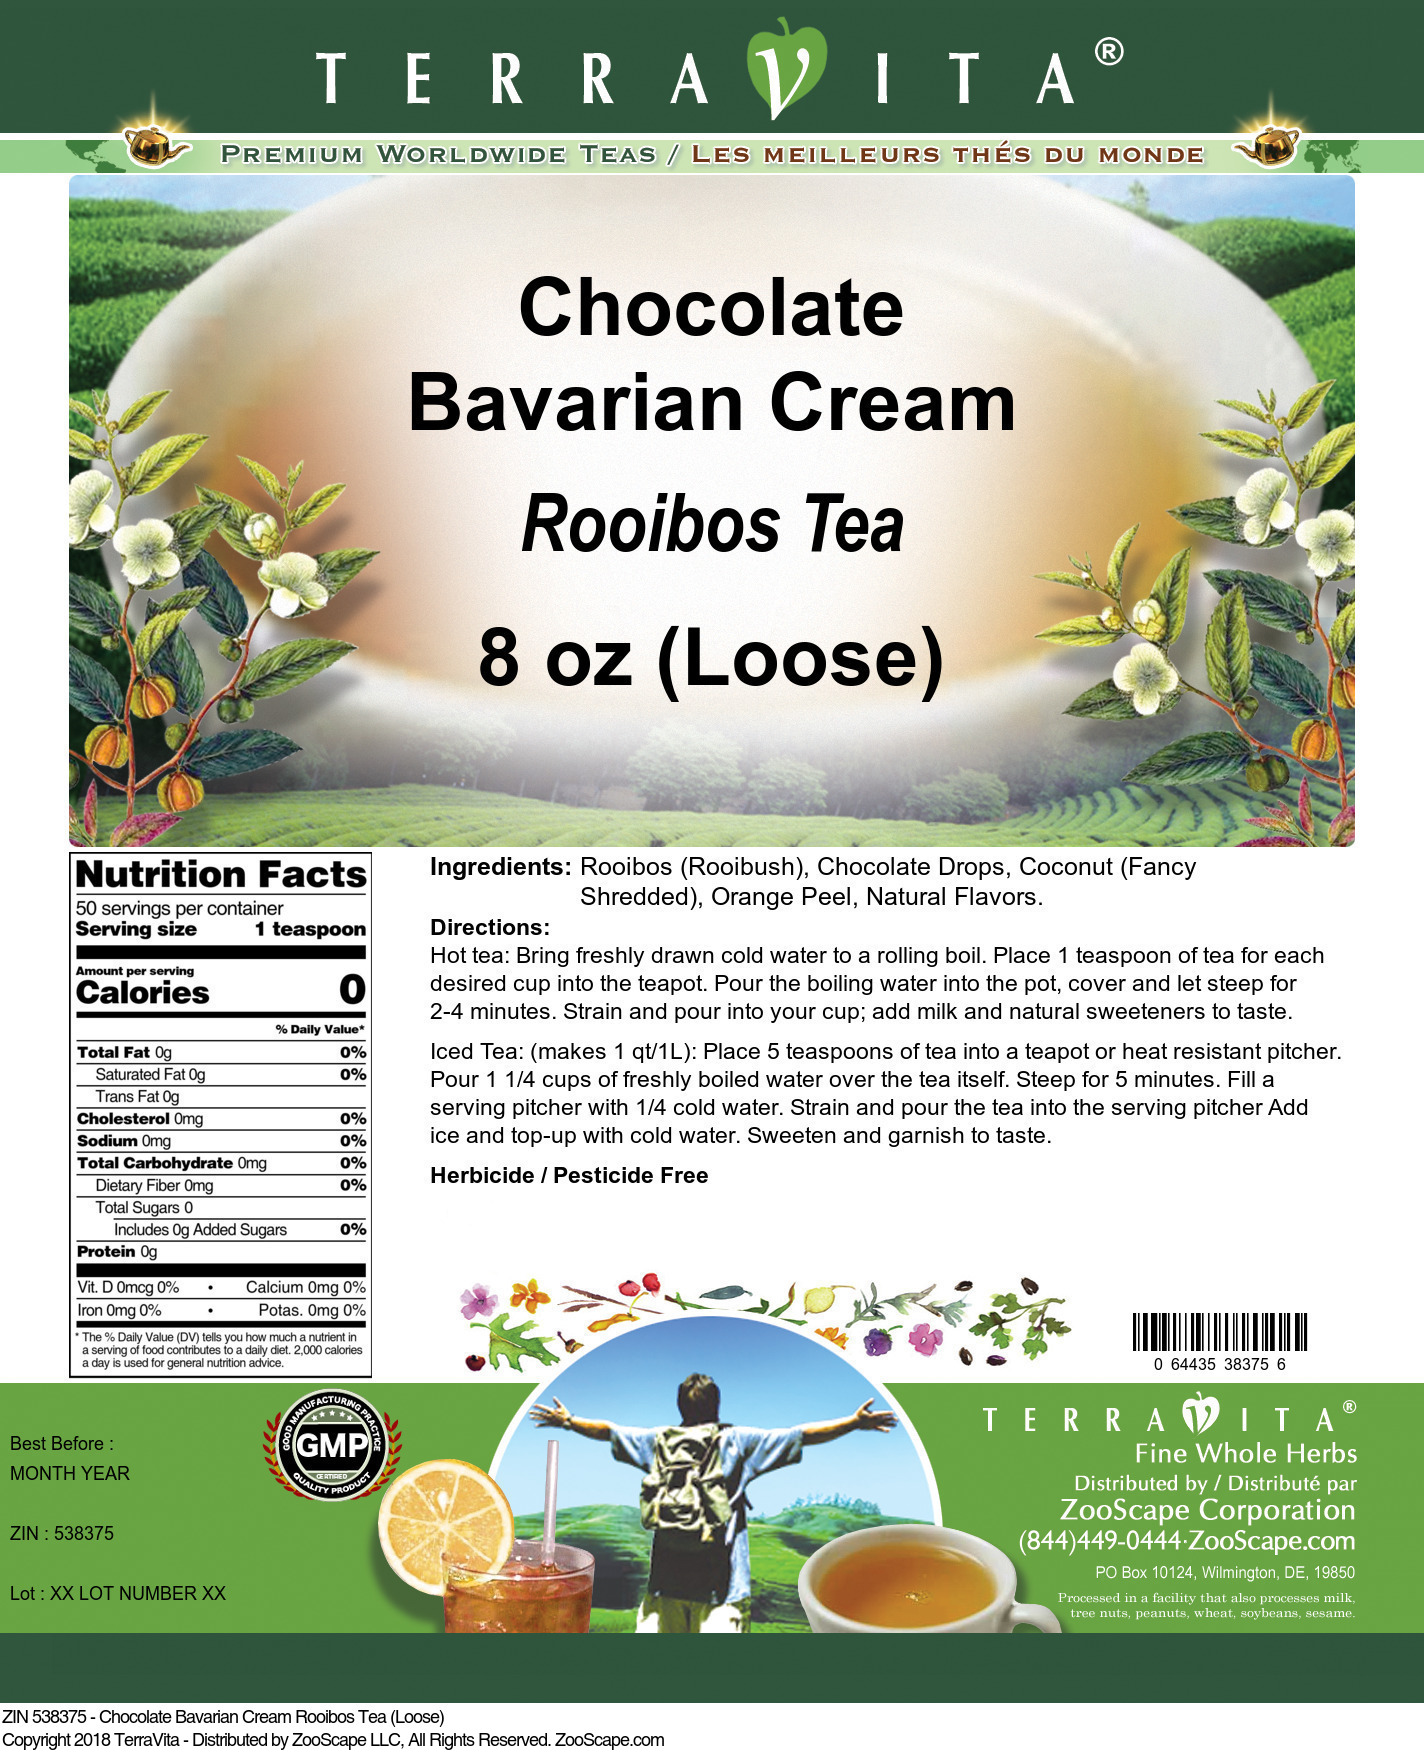 Chocolate Bavarian Cream Rooibos Tea (Loose) - Label